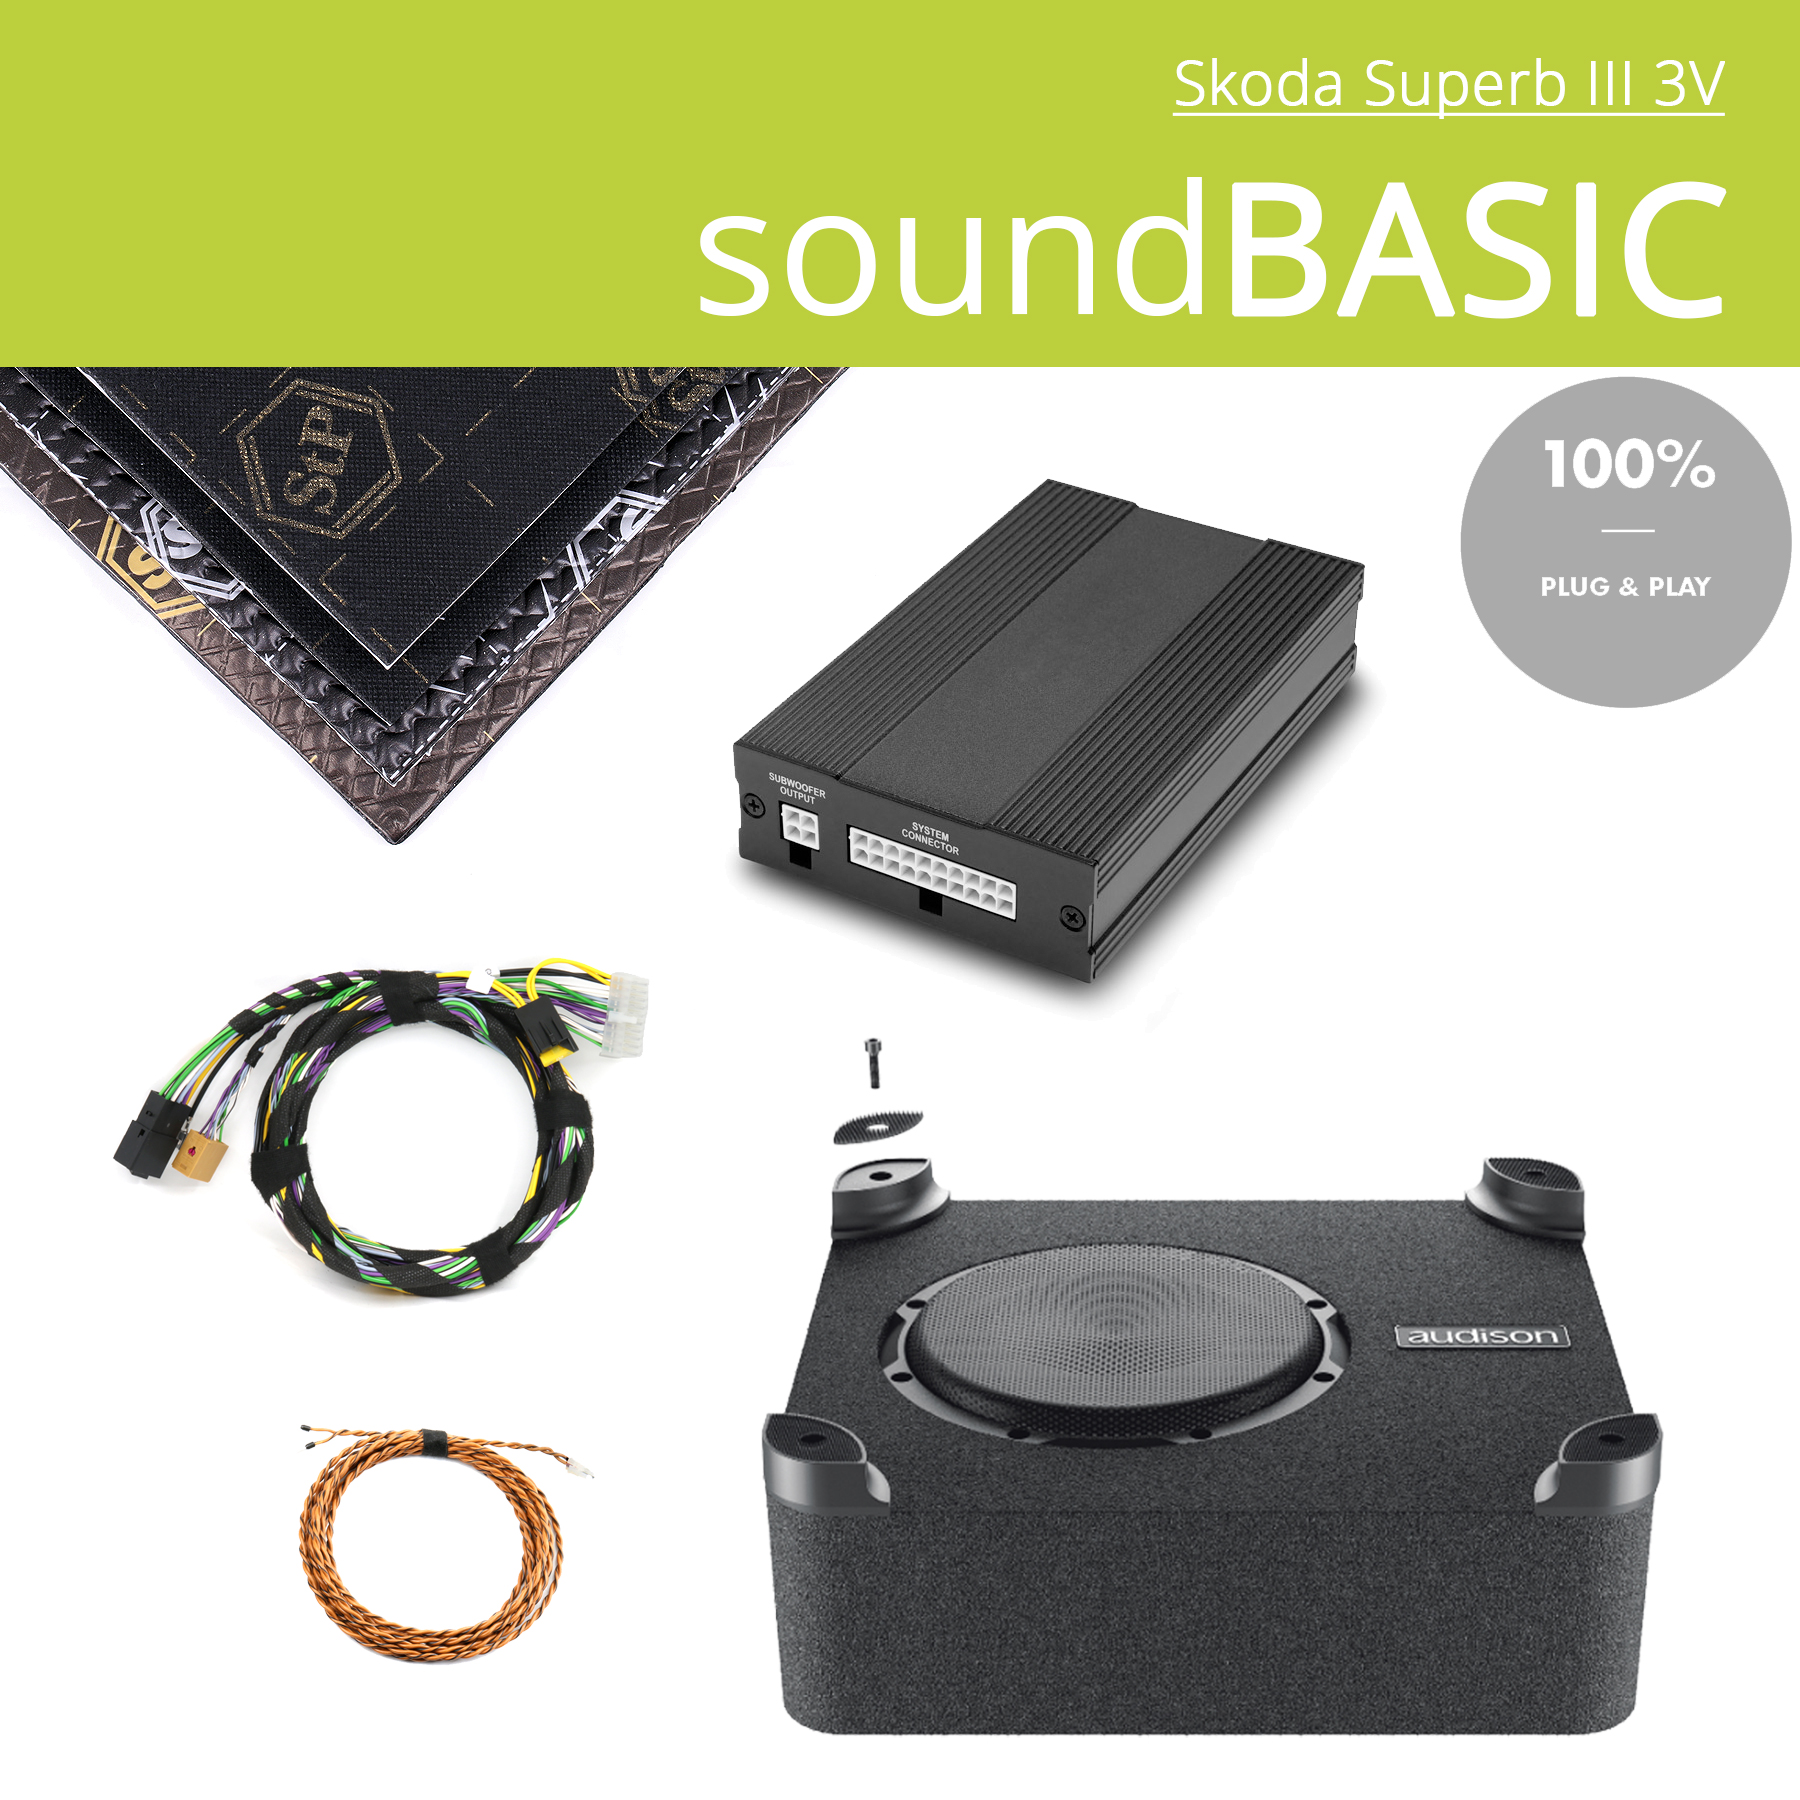 Skoda Superb III 3V soundBASIC